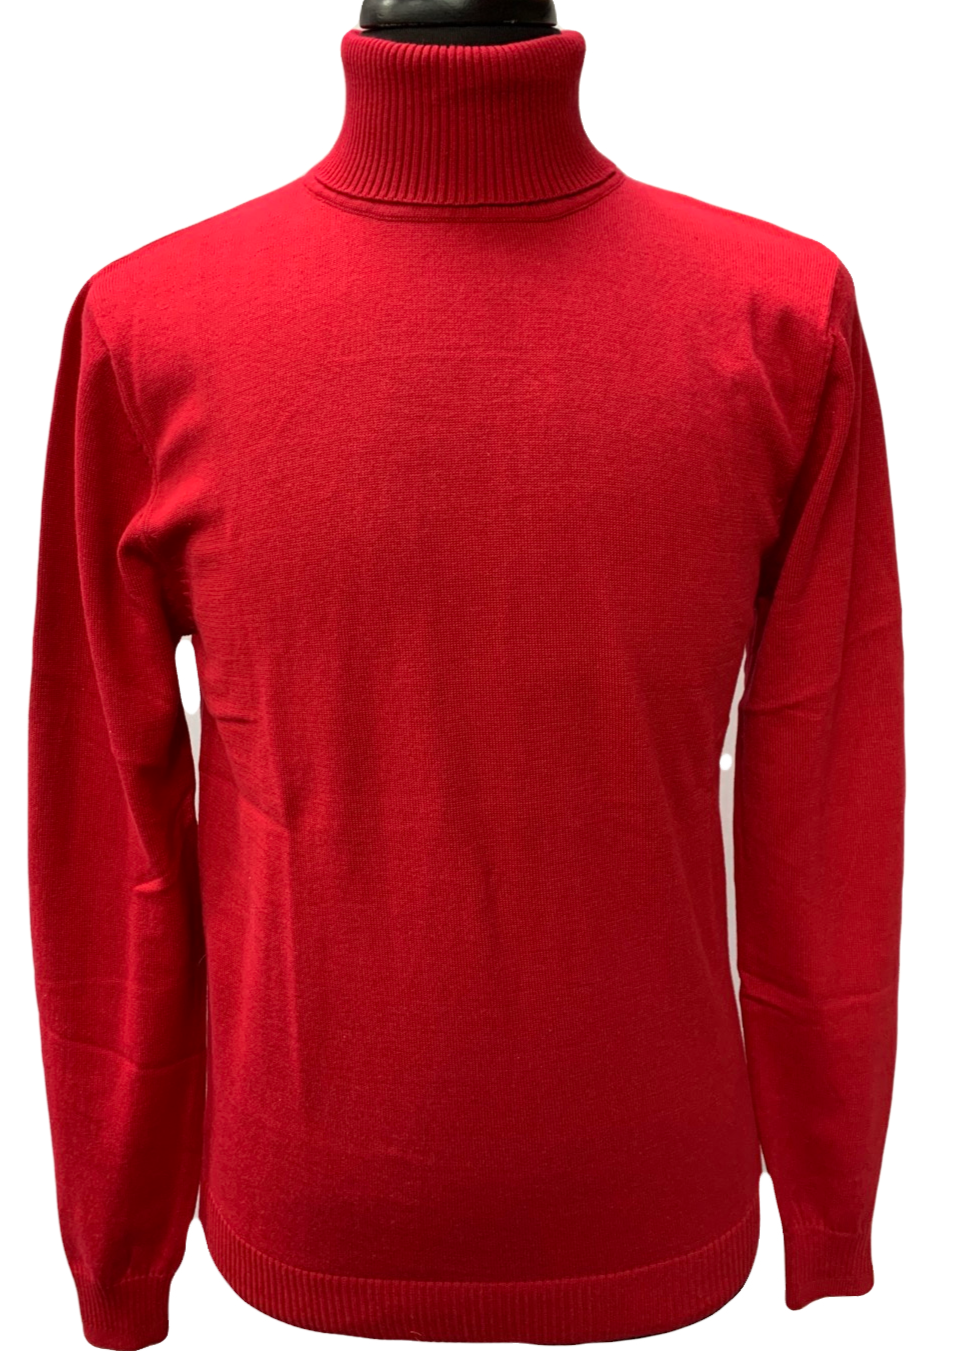 Red Fine knit long sleeve turtleneck sweater